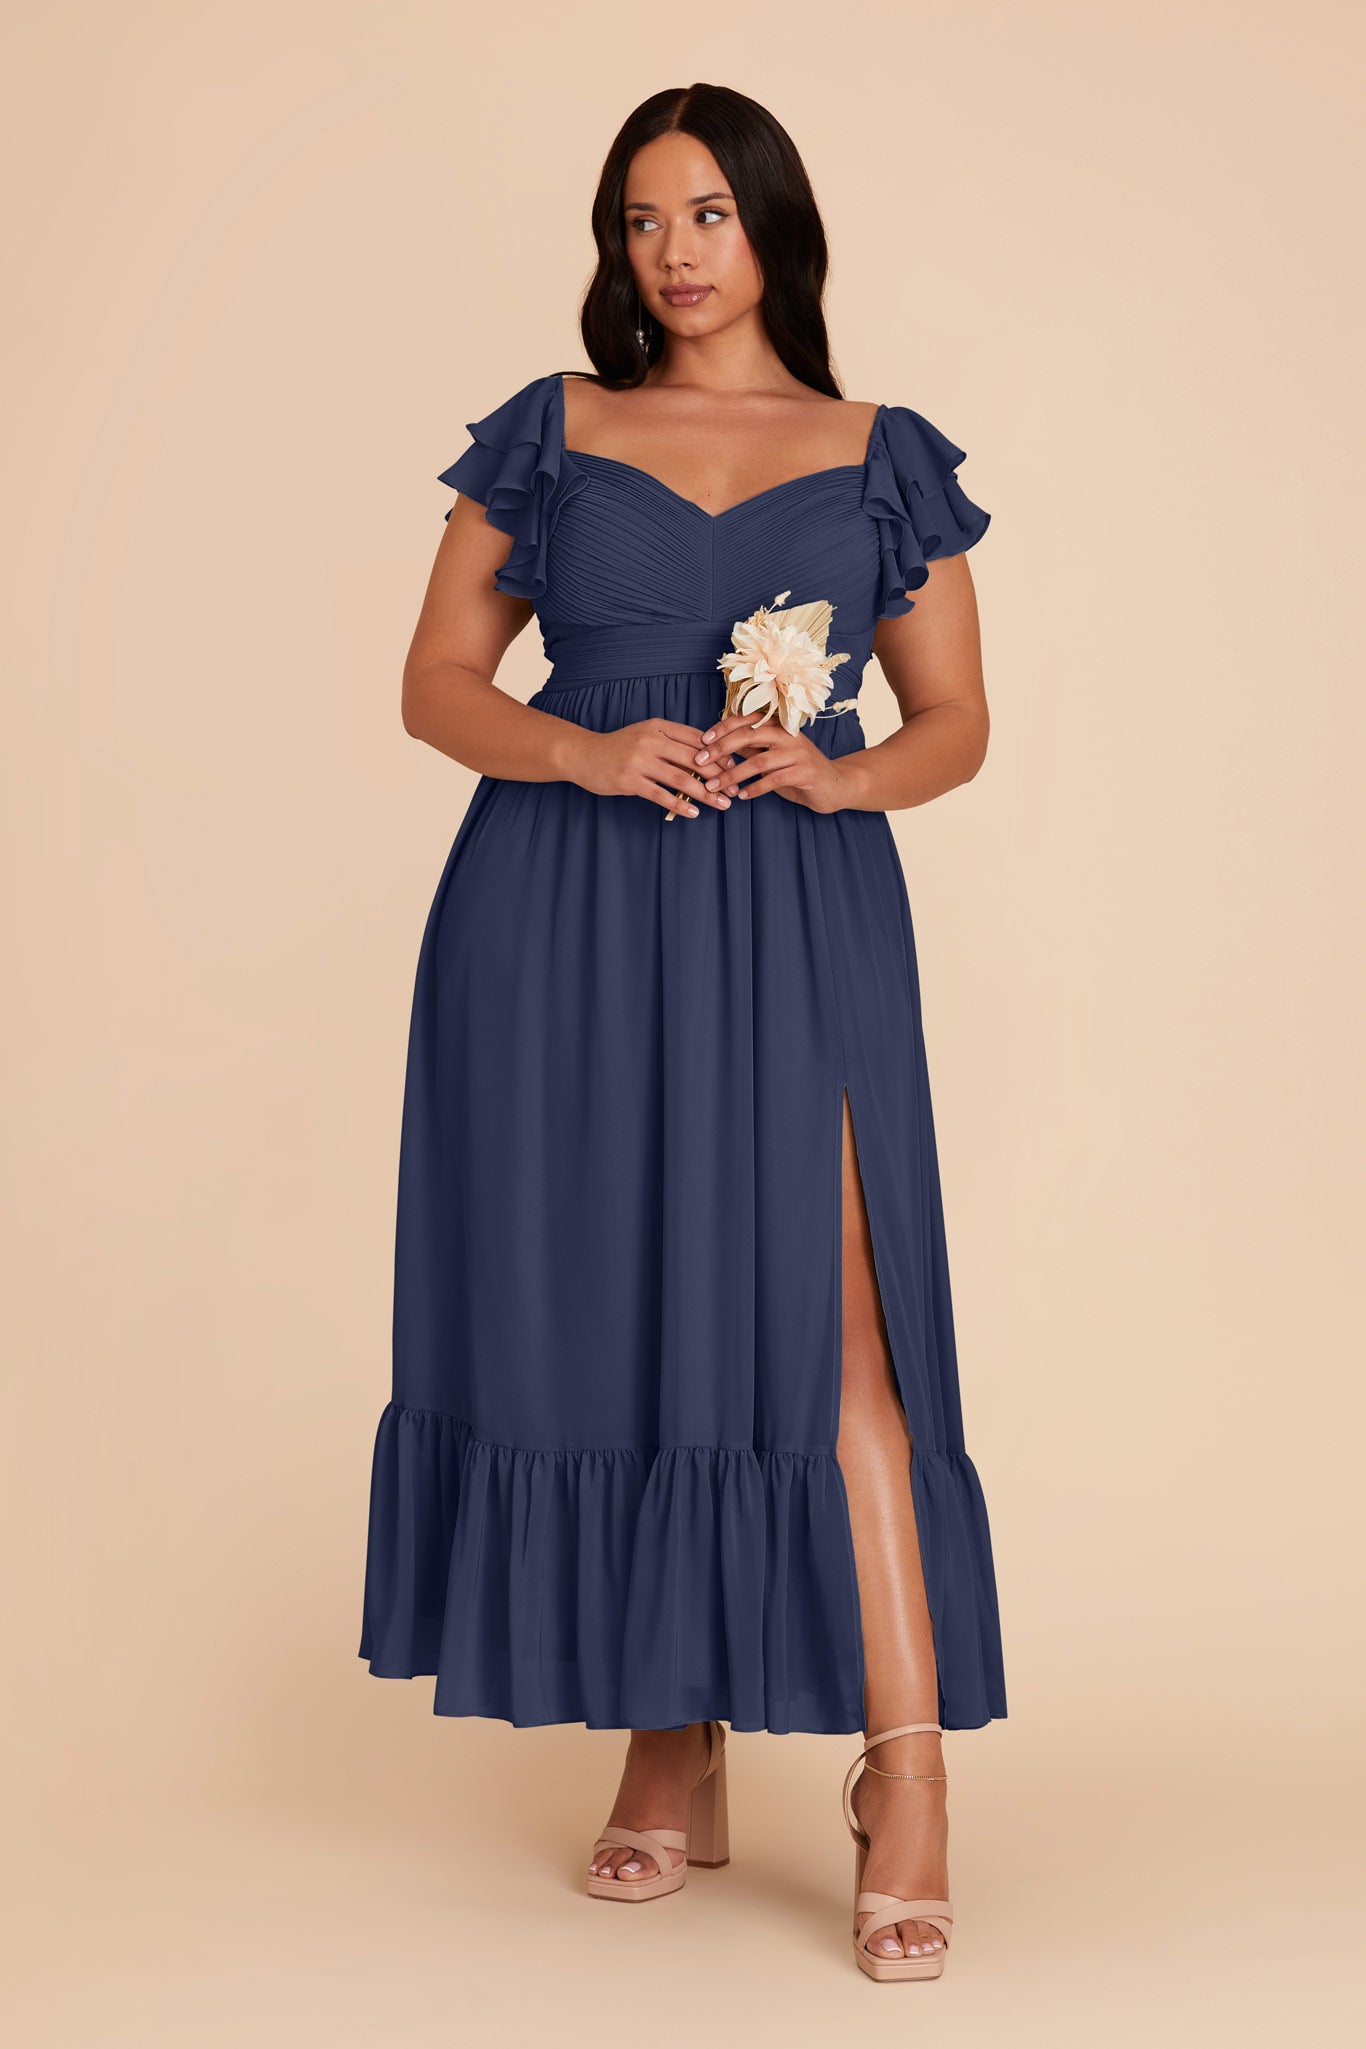 Slate Blue Michelle Chiffon Dress by Birdy Grey